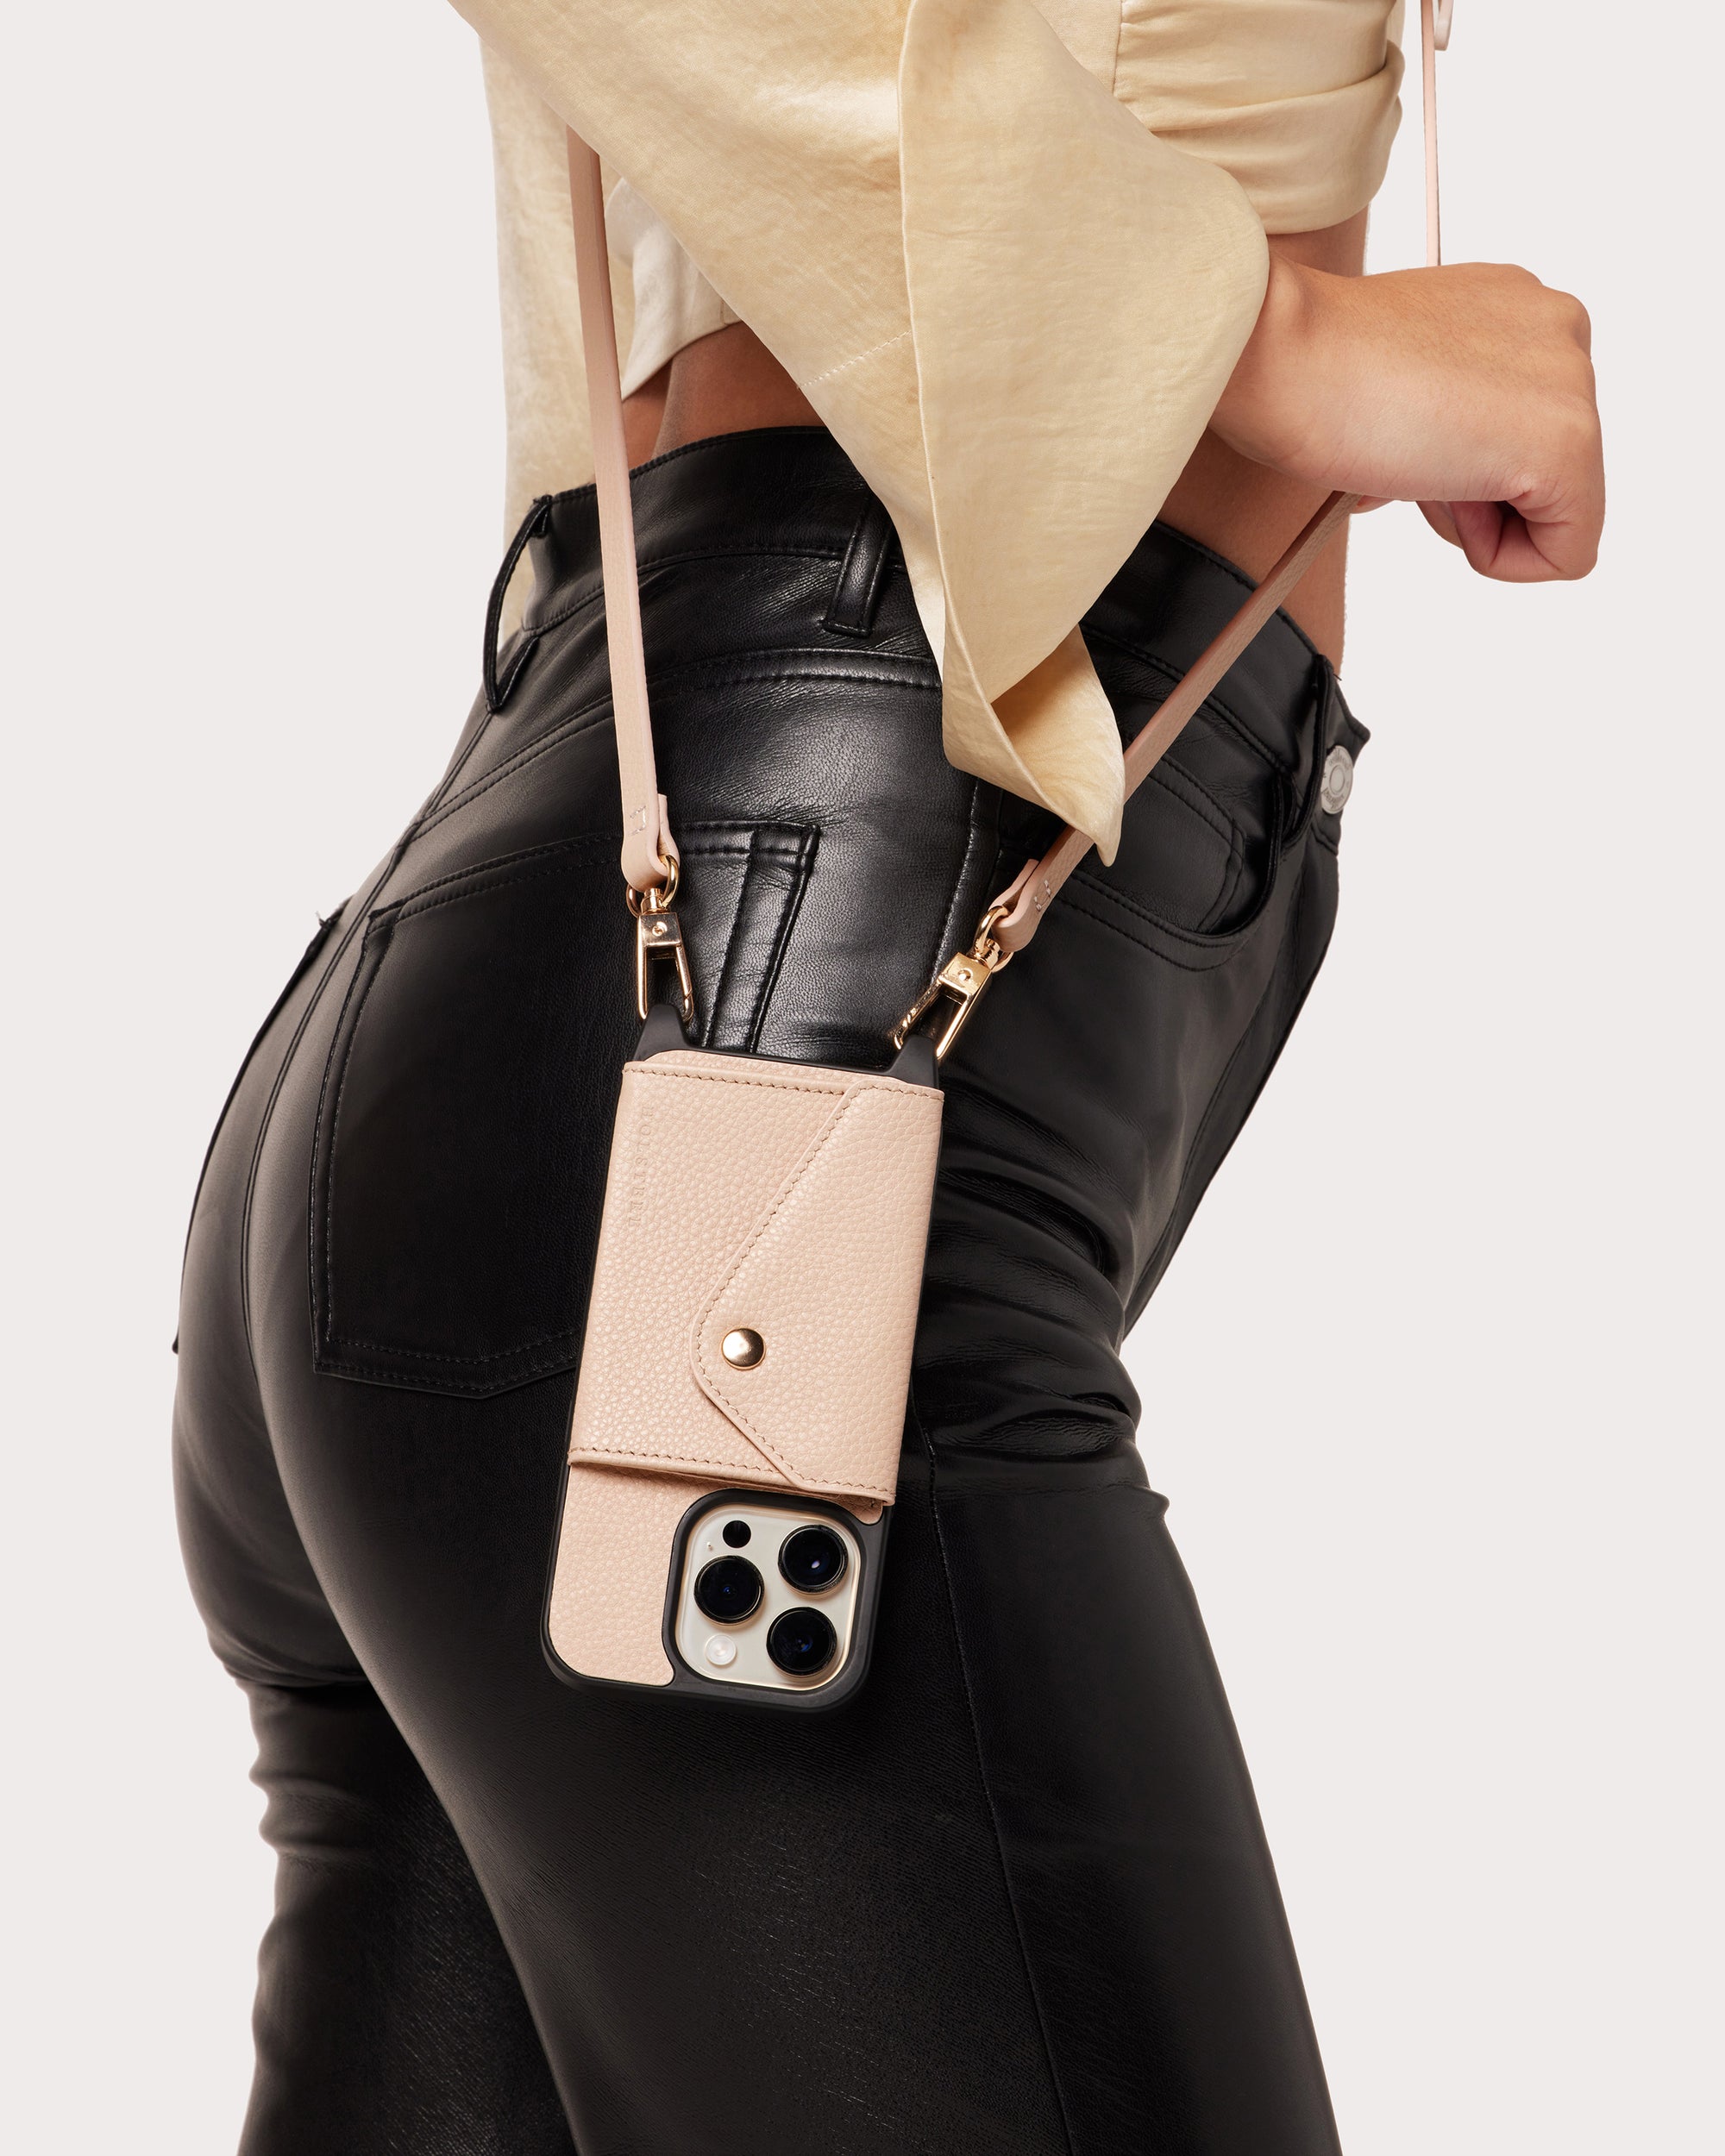 BONHULLE Cell Phone Bag, Women's Crossbody Small Shoulder Handbags